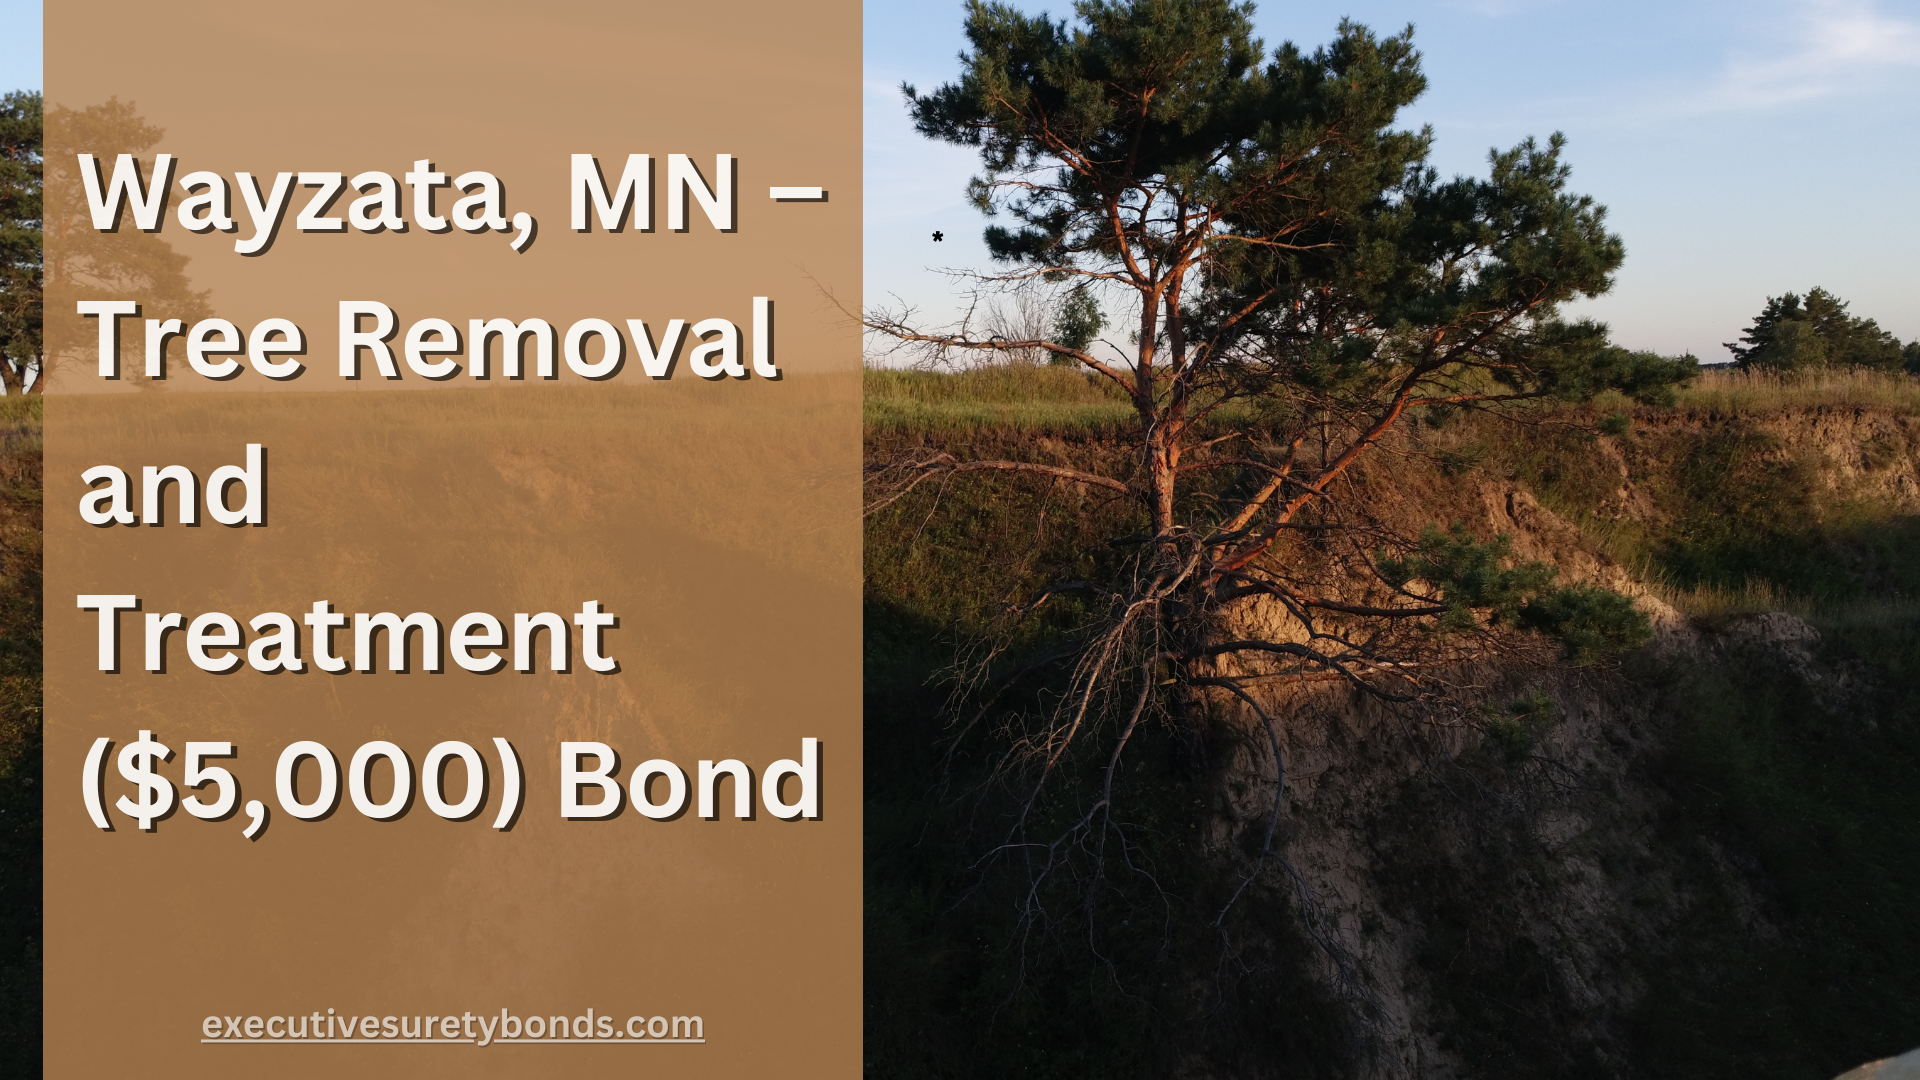 Wayzata, MN – Tree Removal and Treatment ($5,000) Bond